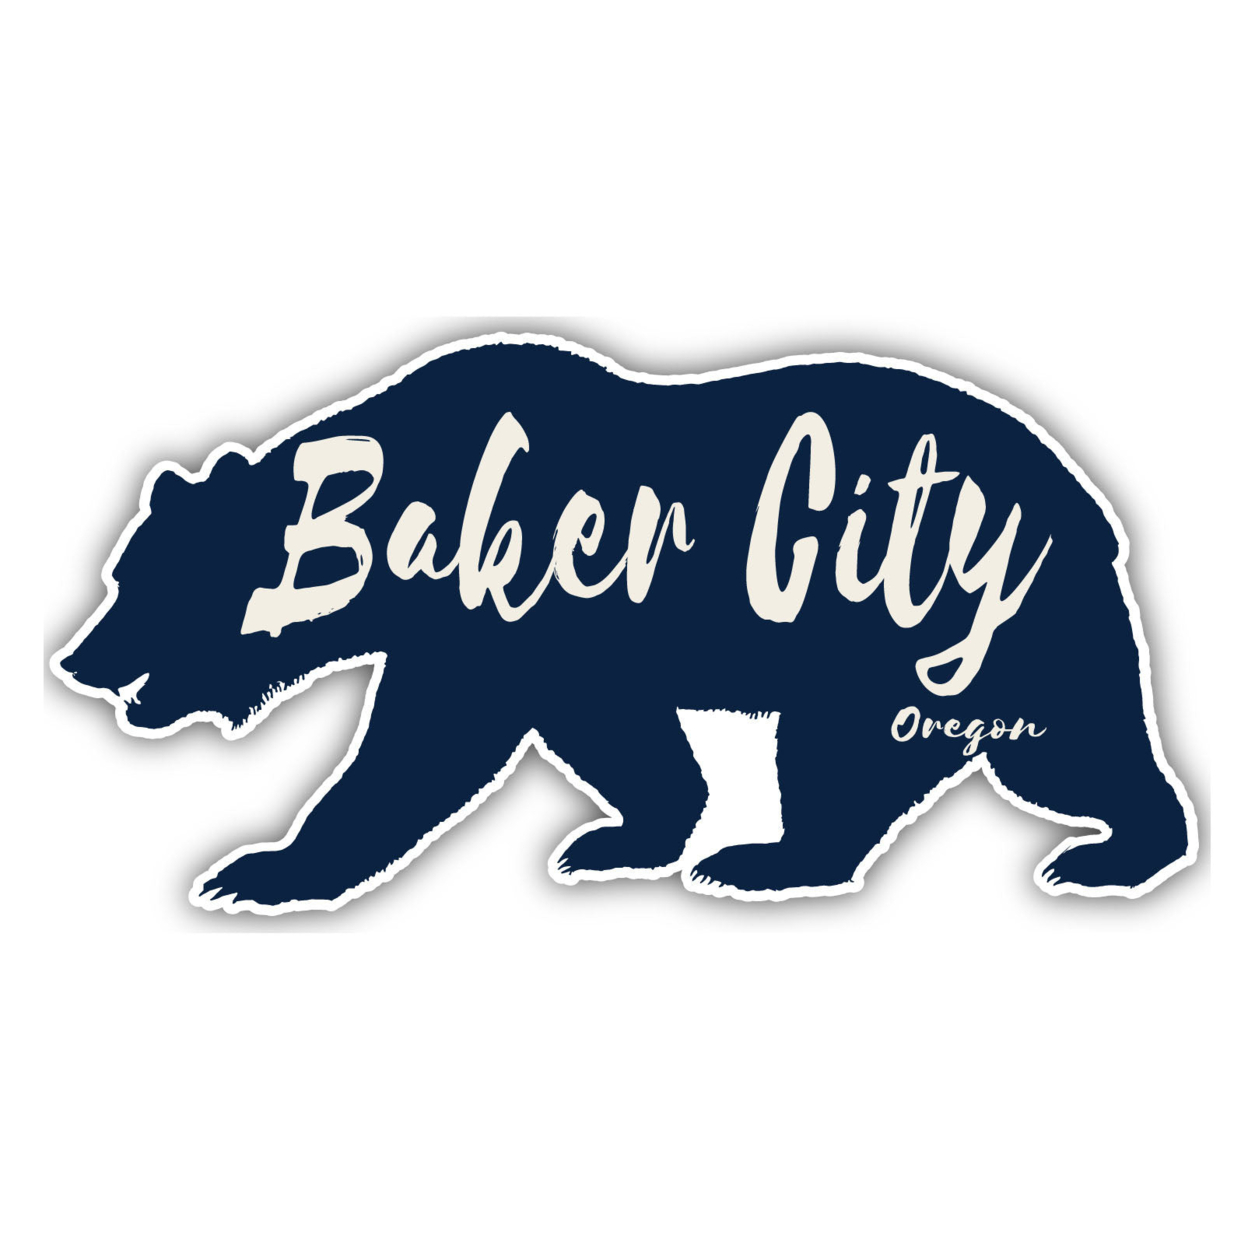 Baker City Oregon Souvenir Decorative Stickers (Choose Theme And Size) - 4-Pack, 6-Inch, Adventures Awaits